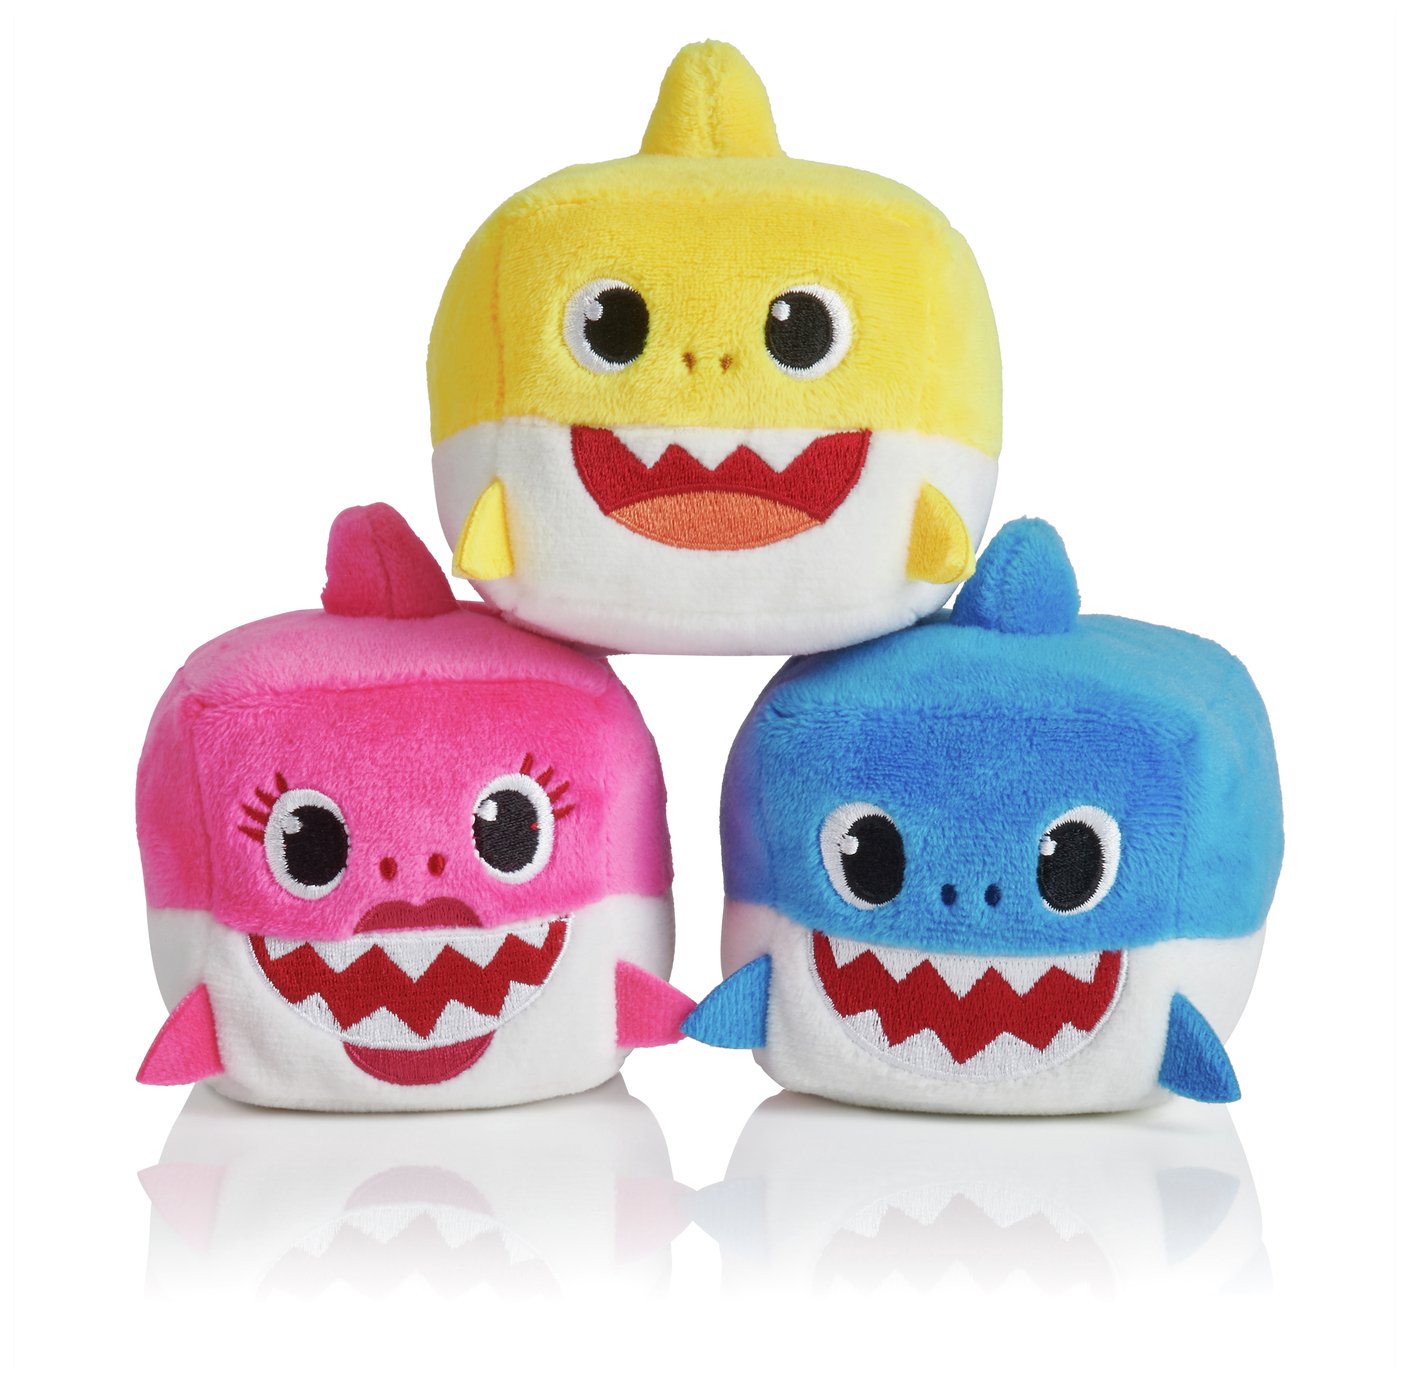 argos baby shark toys